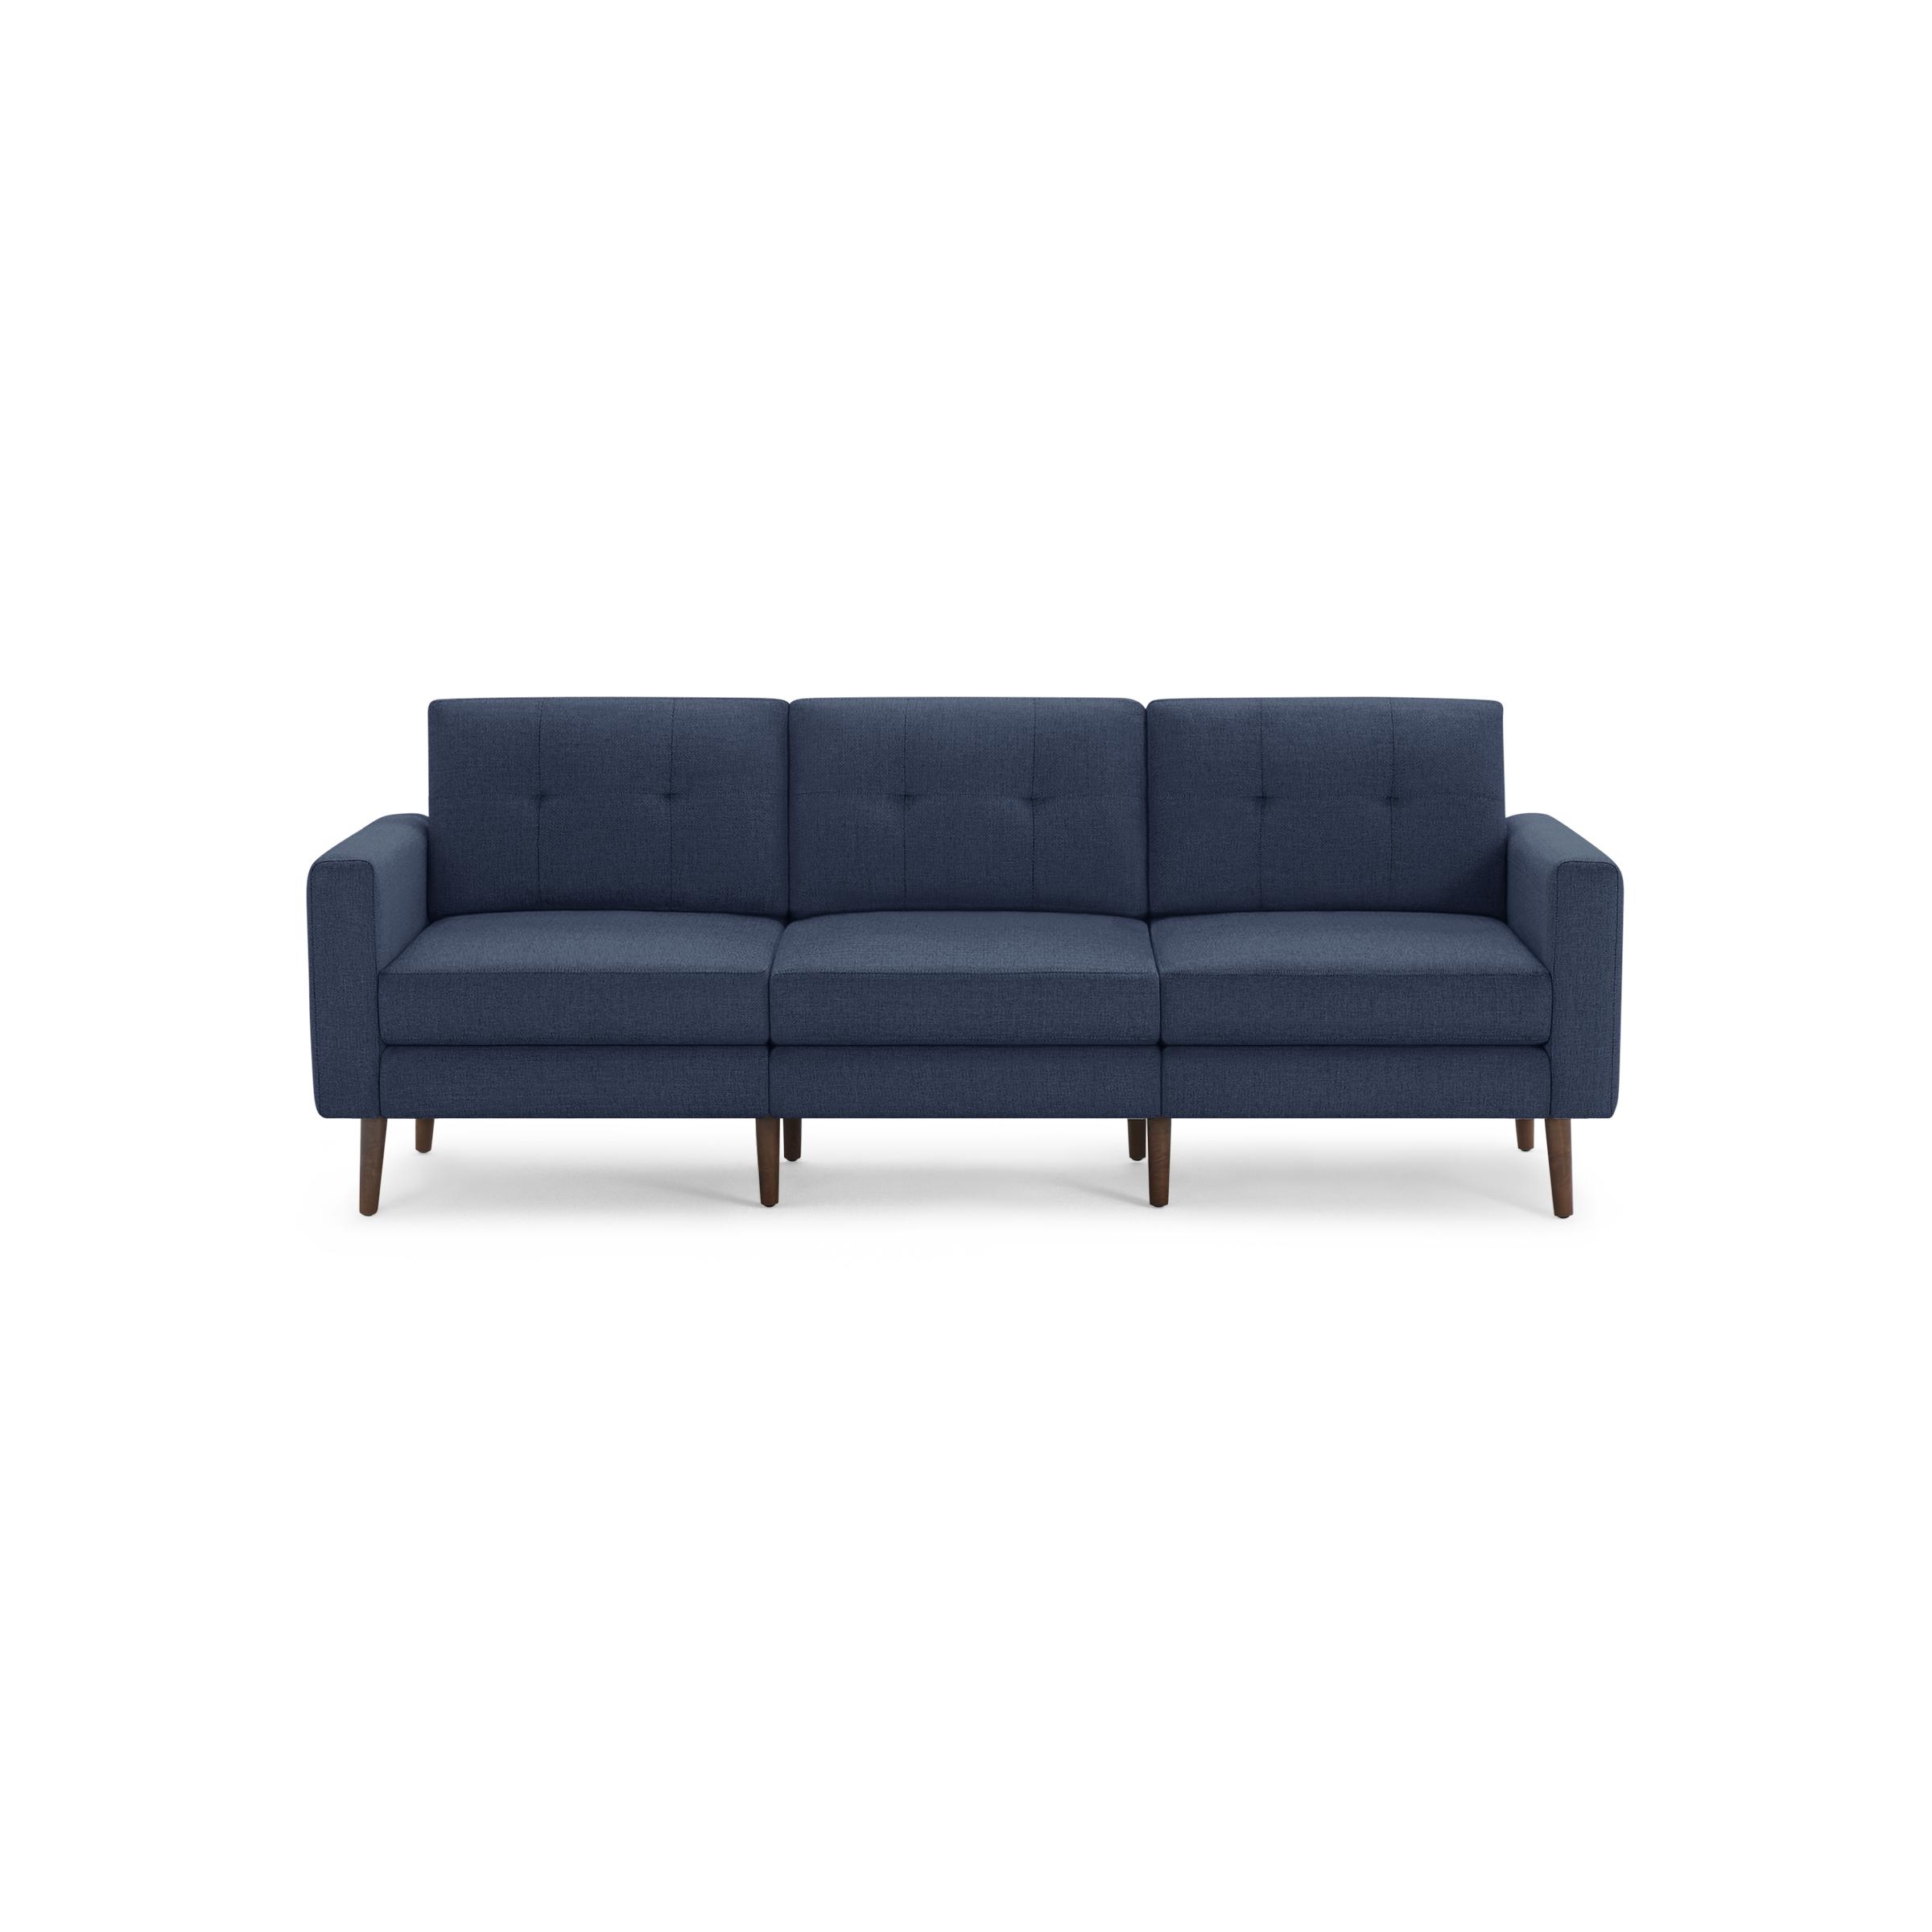 The Block Nomad Sofa in Navy Blue, Walnut Legs - Image 0